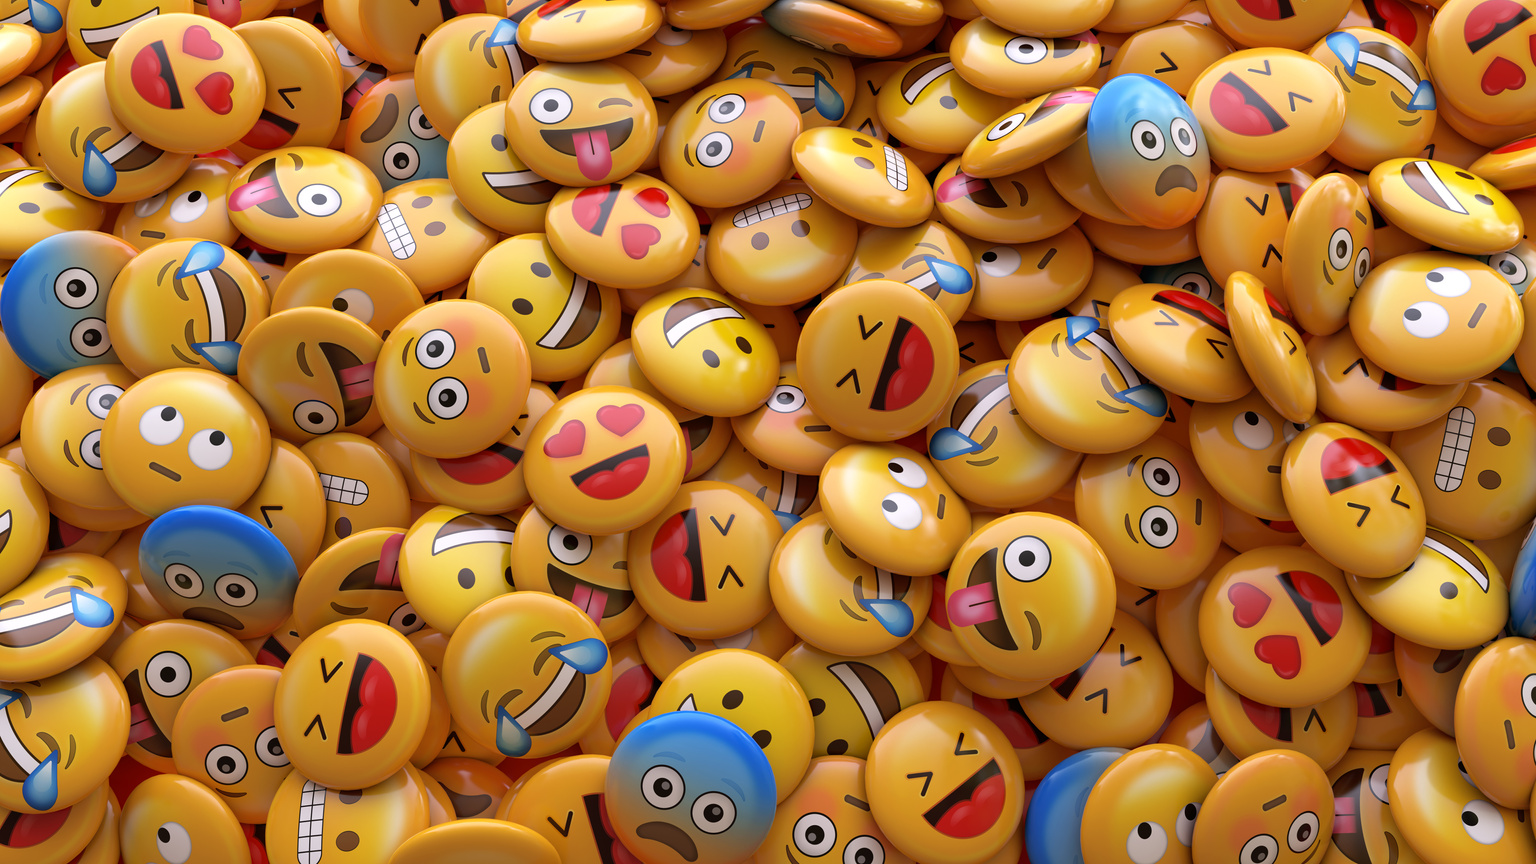 A bunch of emojis